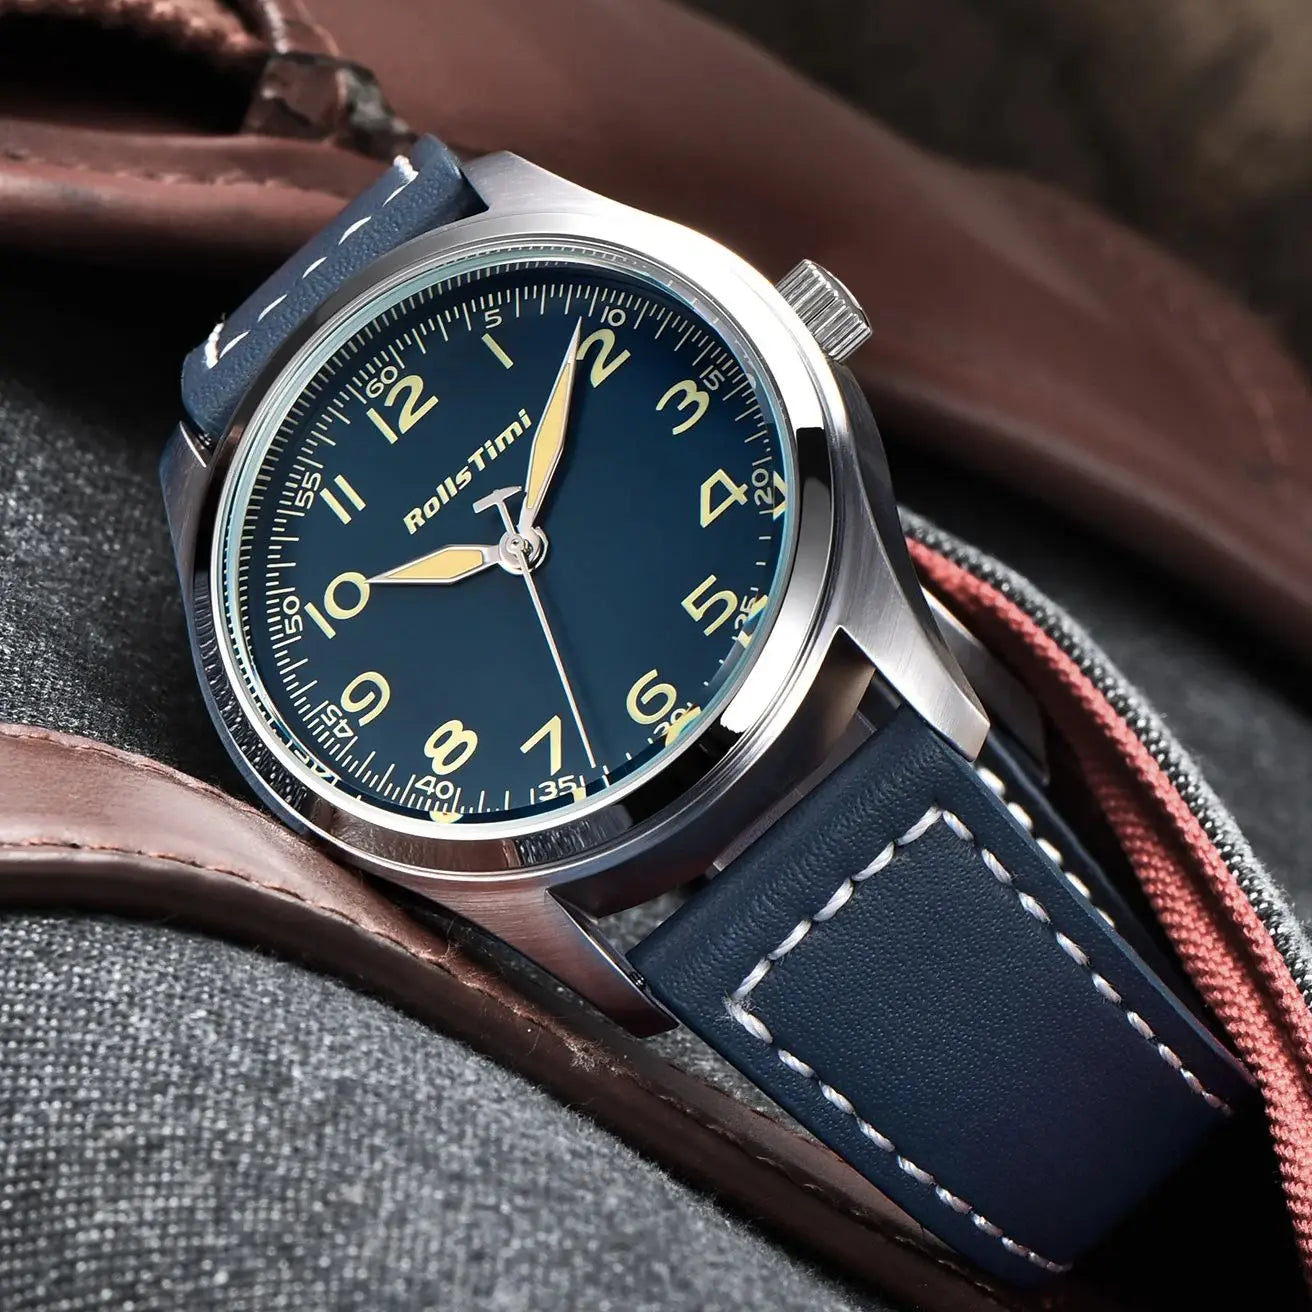 Top Luxury Rollstimi 2023 New Retro Pilot Men's Watches